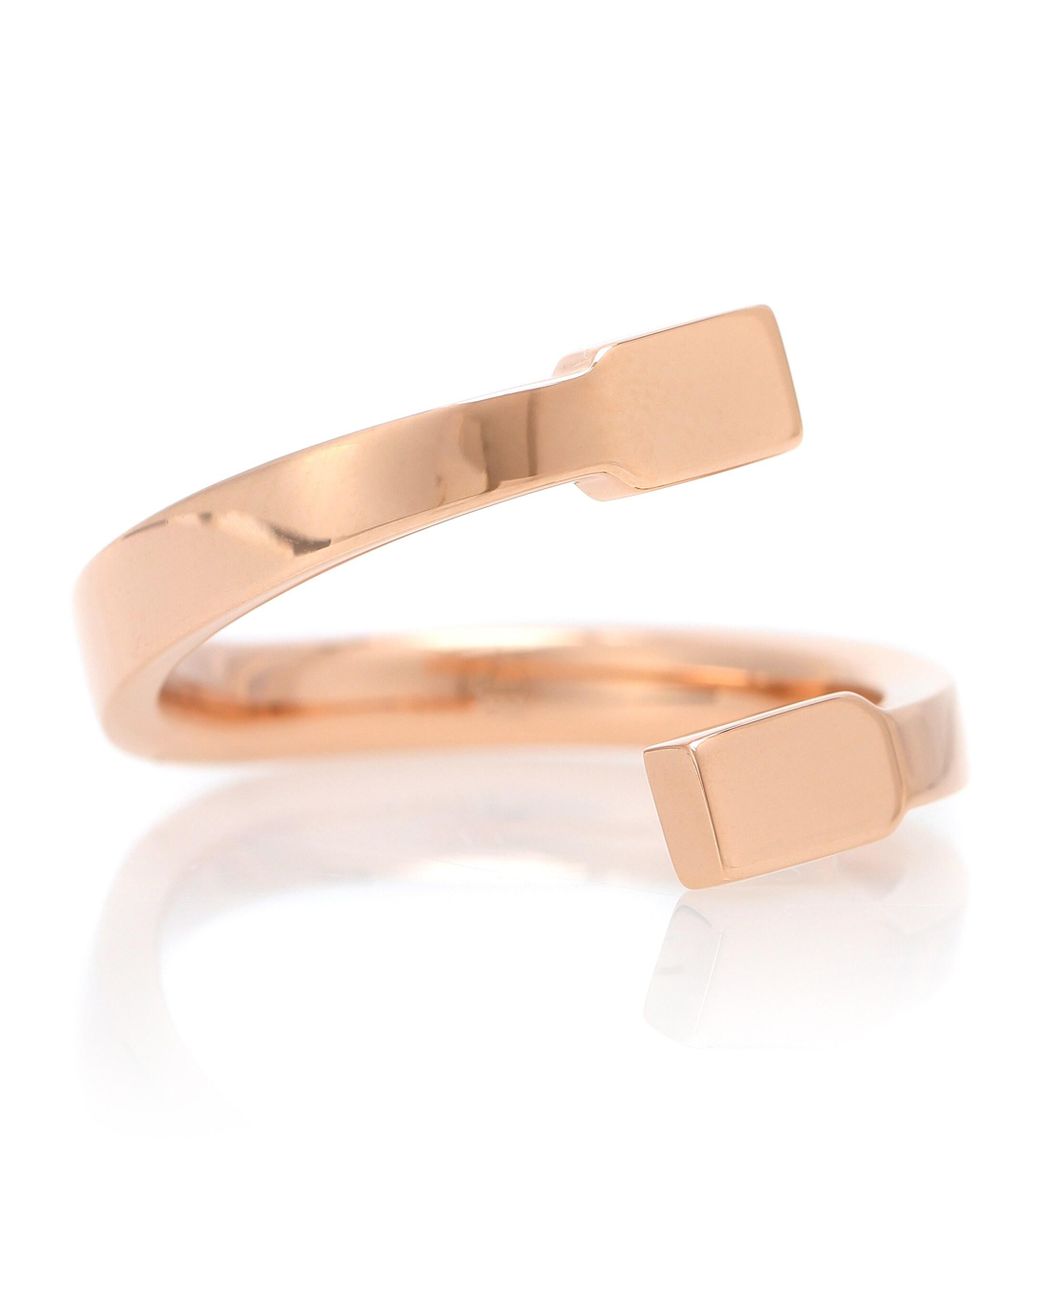 Repossi Serti Sur Vide 18kt Rose Gold Ring in Metallic - Lyst